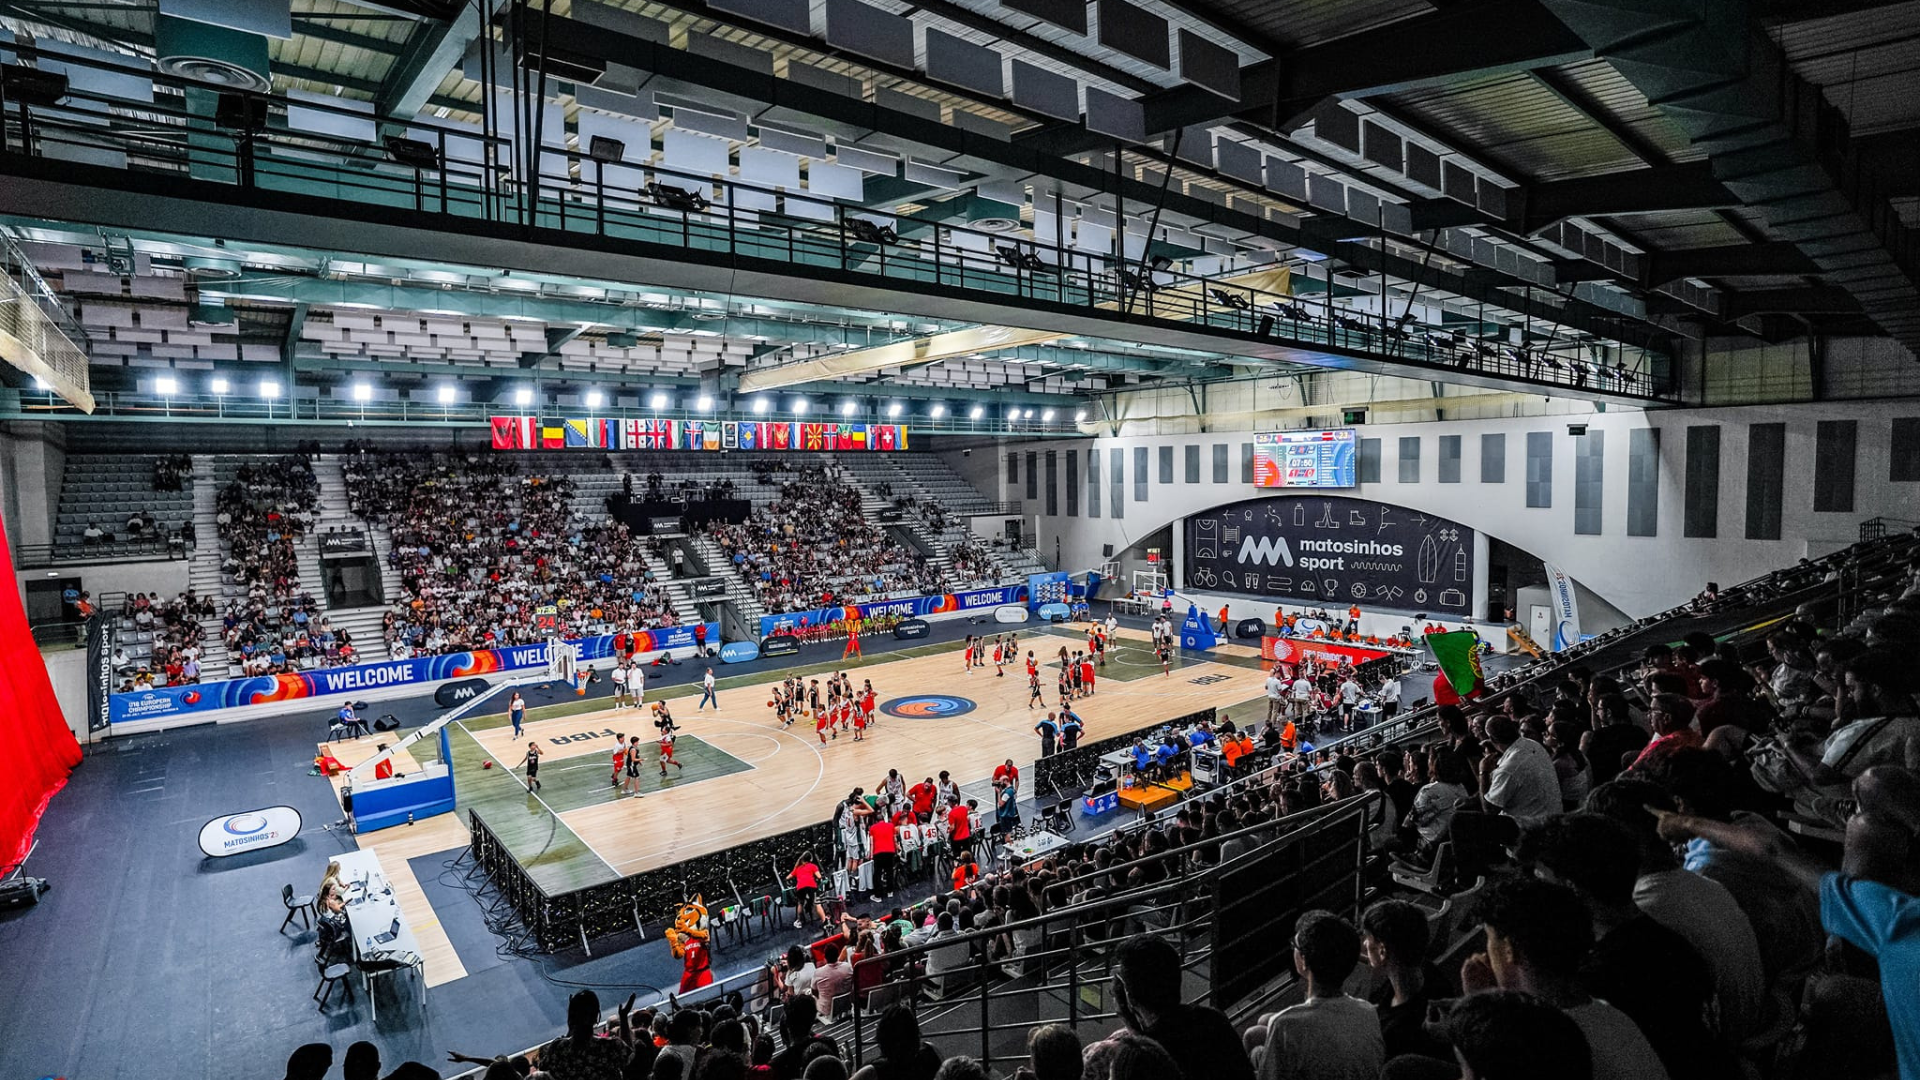 2023 FIBA U18 Euro Basketball (Div. B)